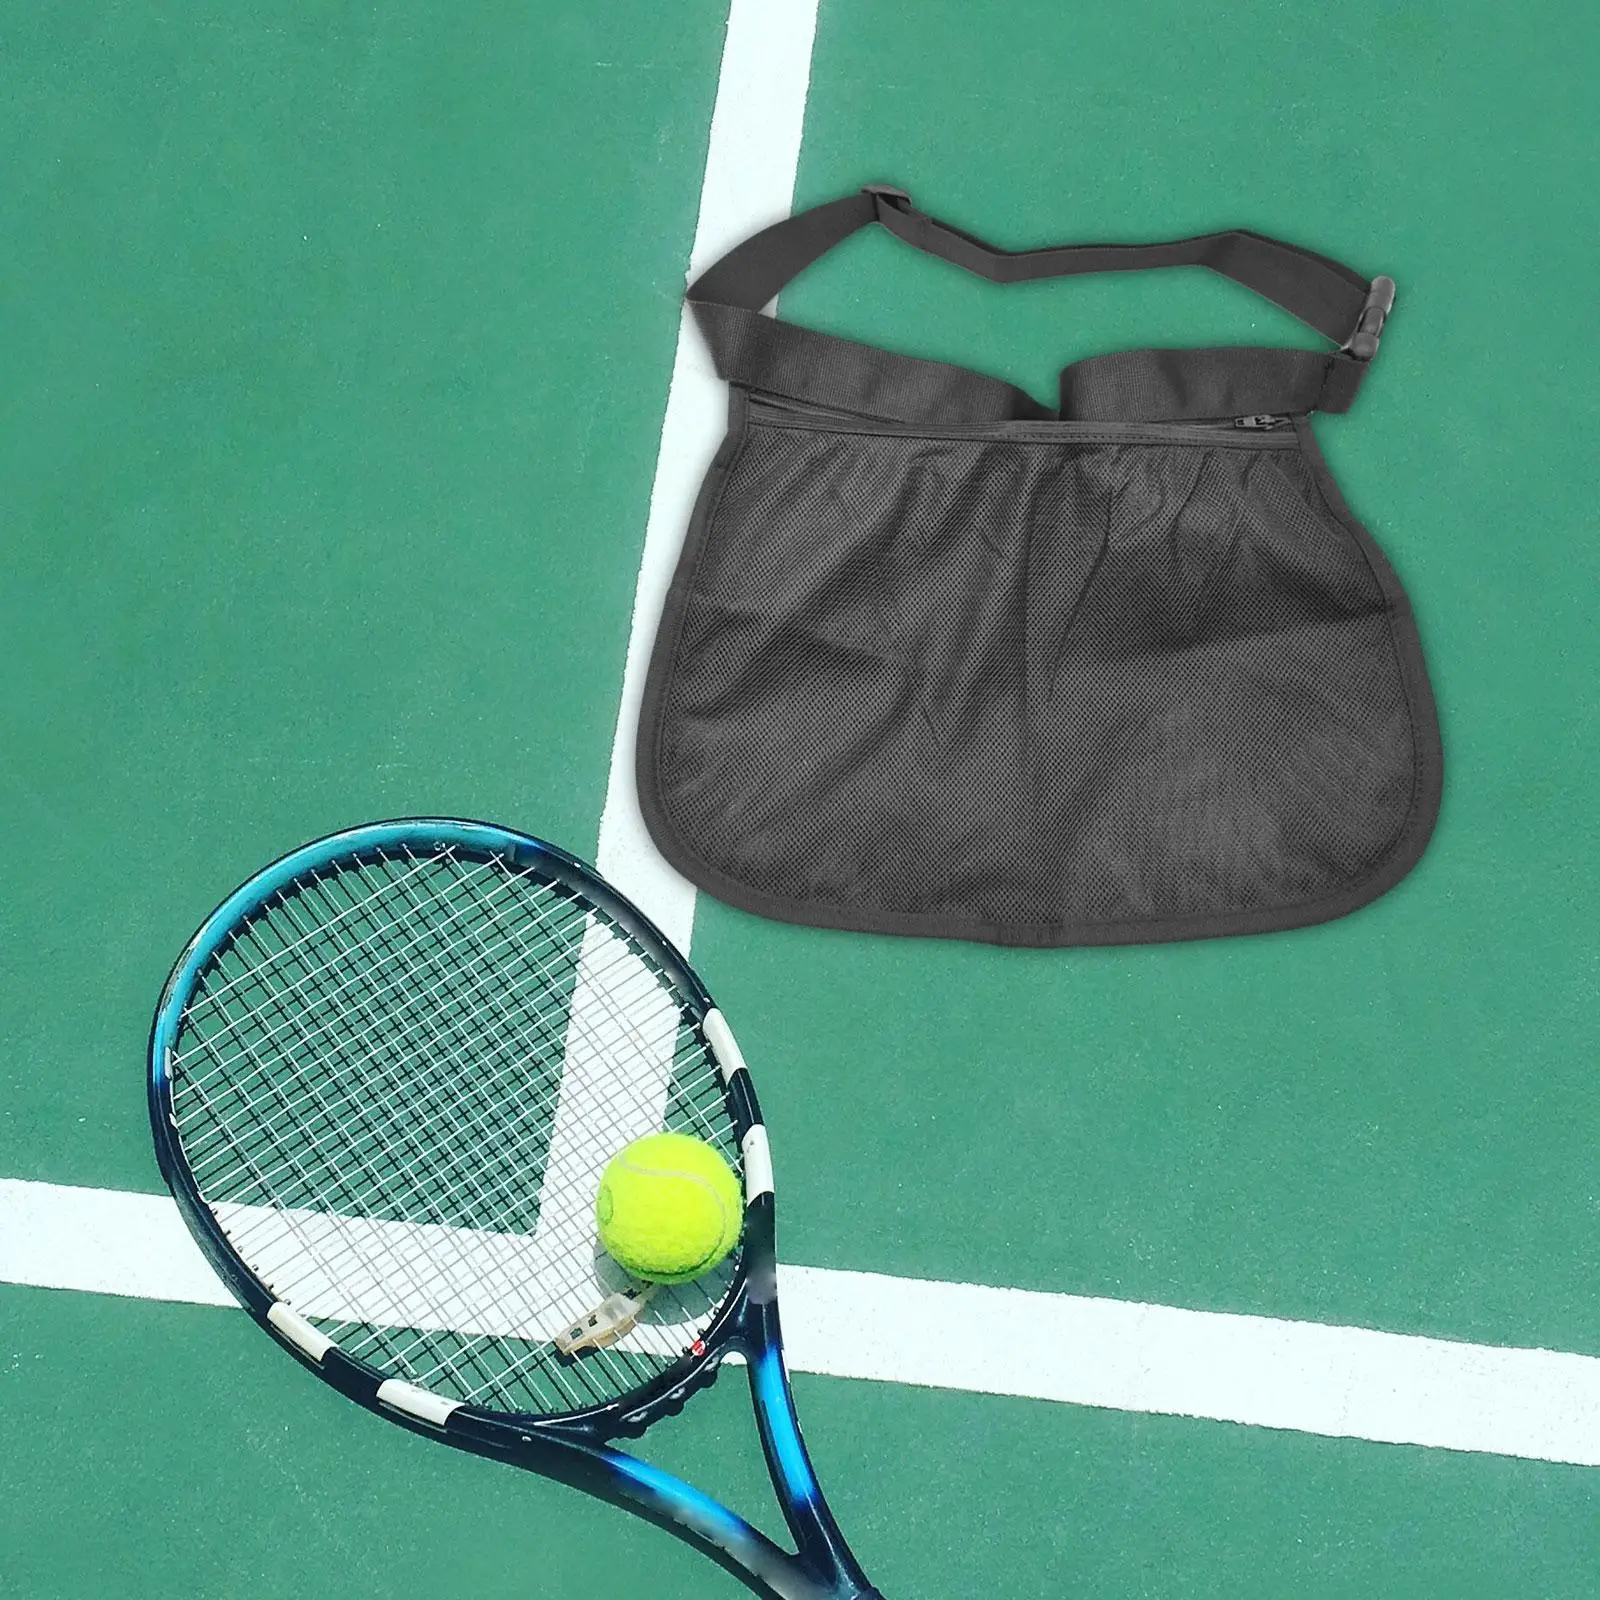 Black Tennis Ball Holder Waist Pouch Bag Holding 8 Tennis Balls Golf Balls Fanny Pack for Exercise Storing Balls and Phones